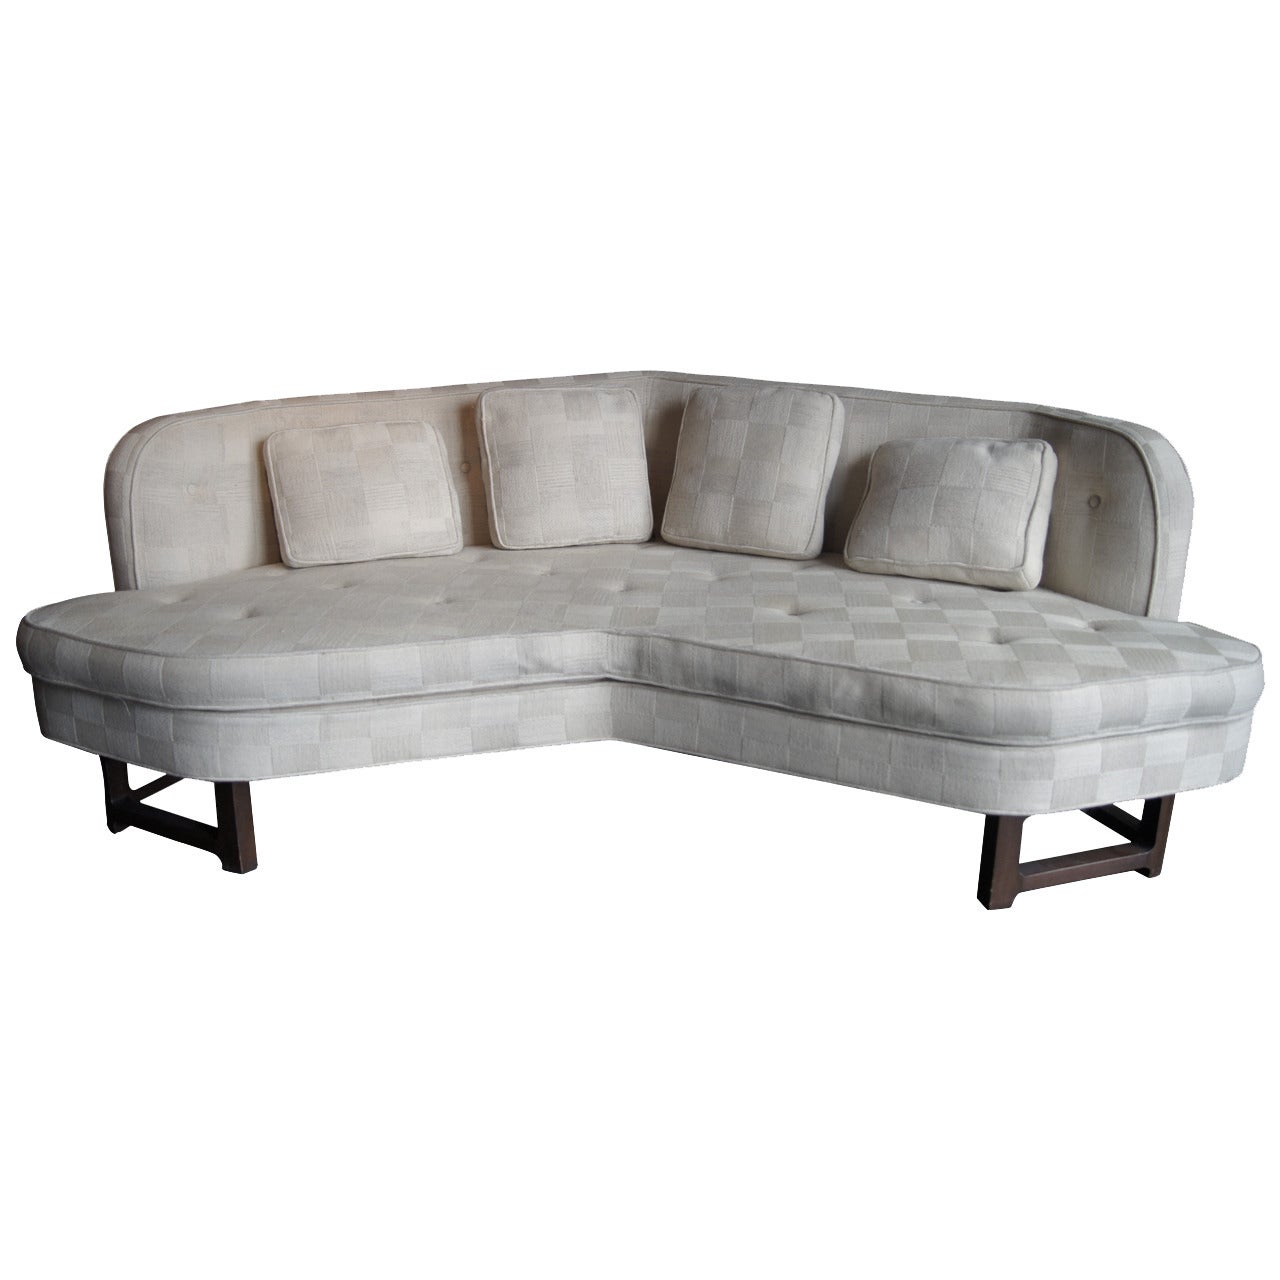 Angular Janus Collection Sofa, Model 6329, by Edward Wormley for Dunbar